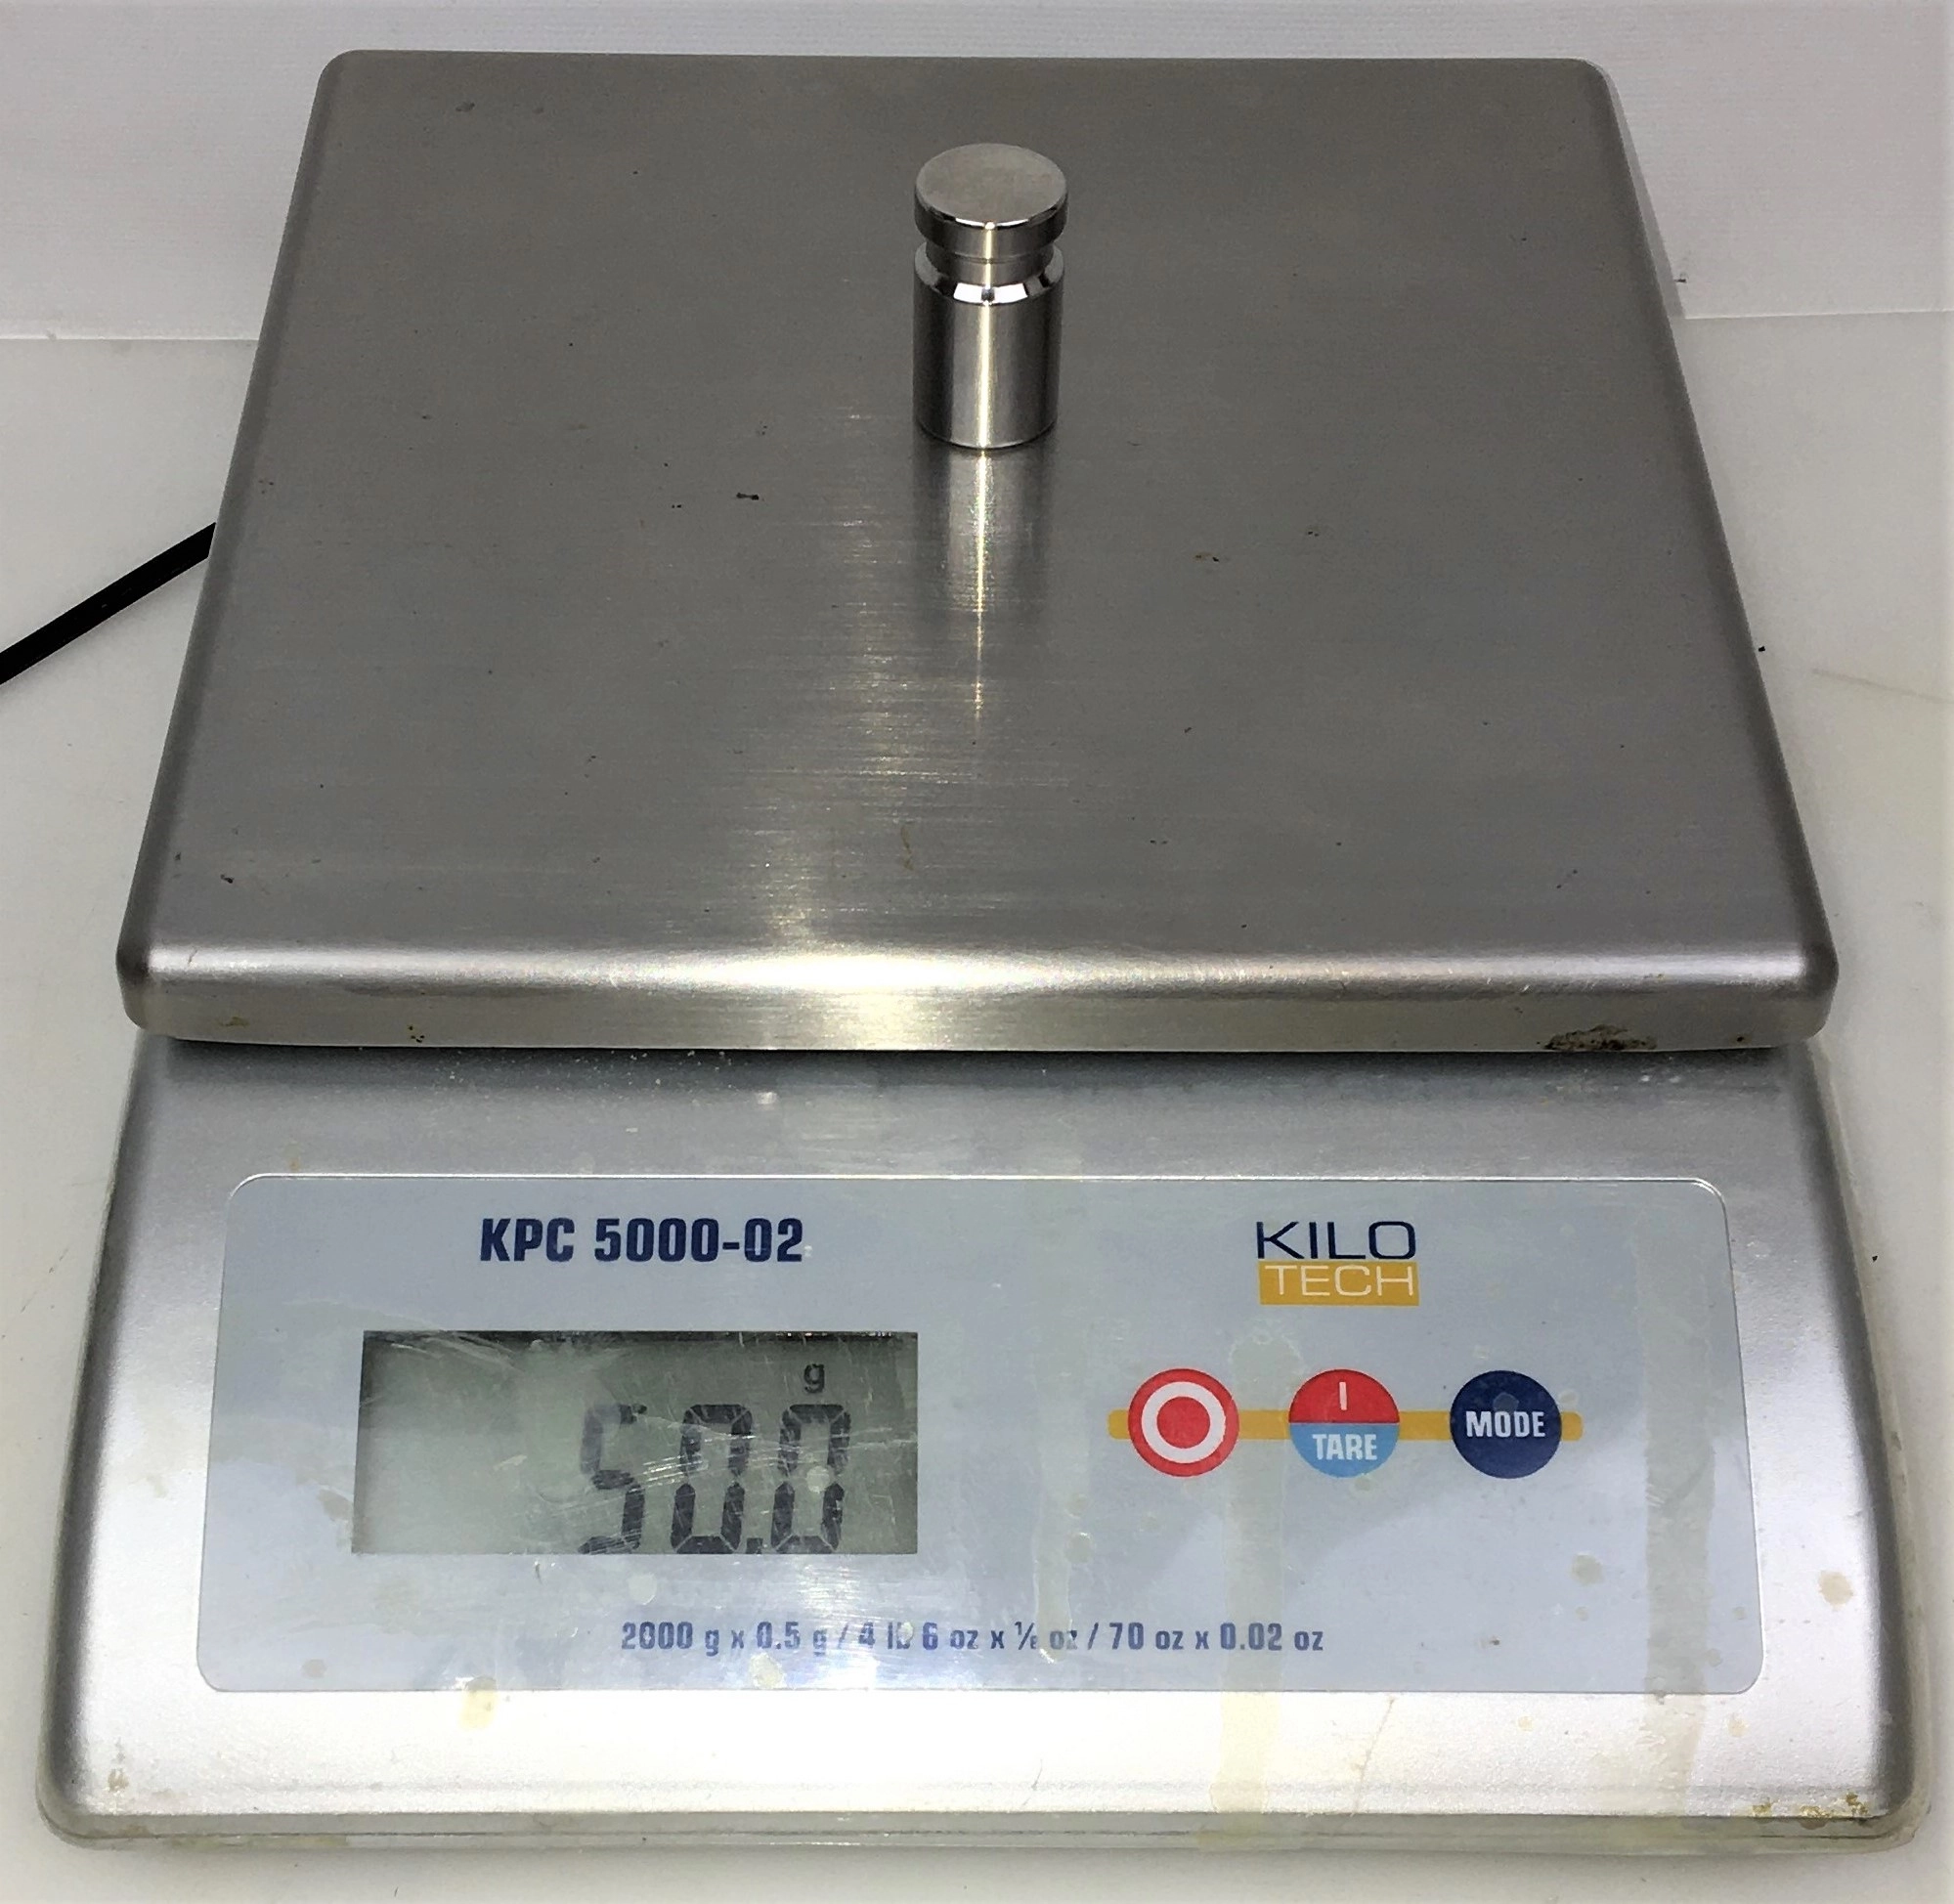 ViBRA HT-224 R Analytical Balance, 224 g x 0.1 mg - Scales Plus